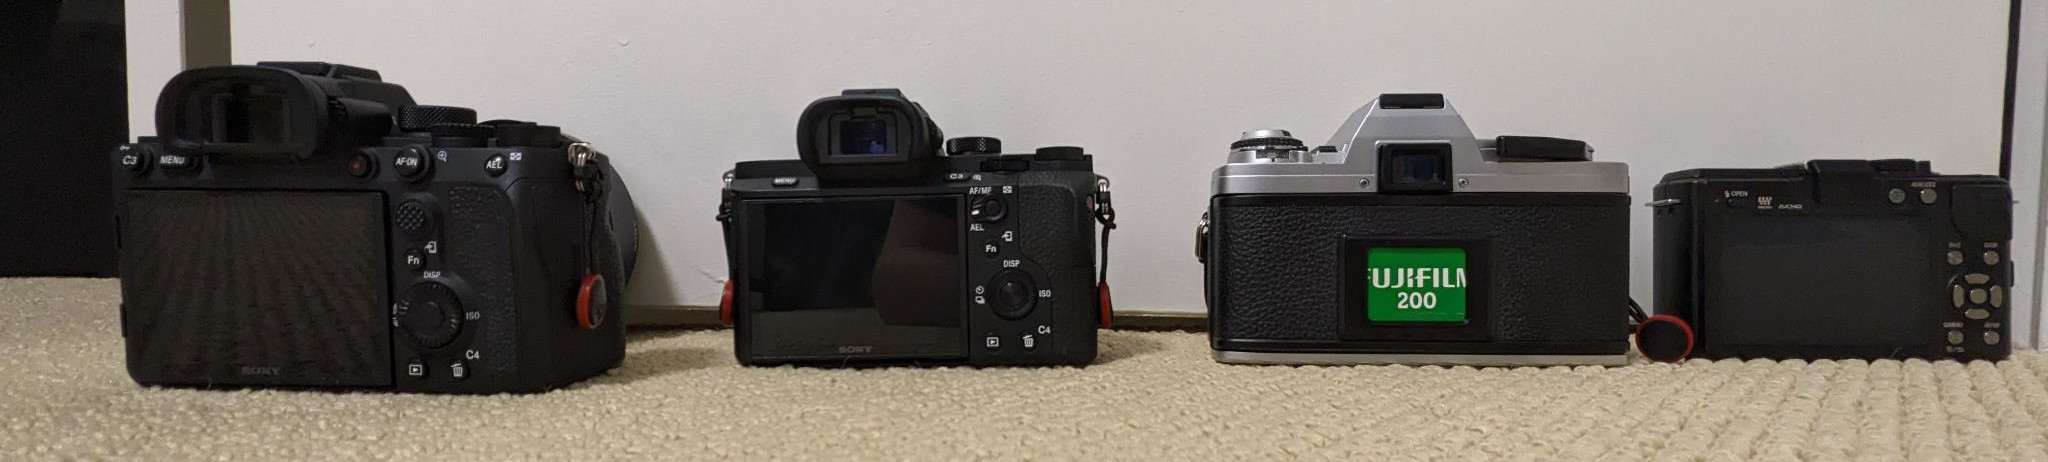 Camera Height Comparison: Sony a7rIV vs Sony a7ii vs Minolta X-370 vs Panasonic GX1